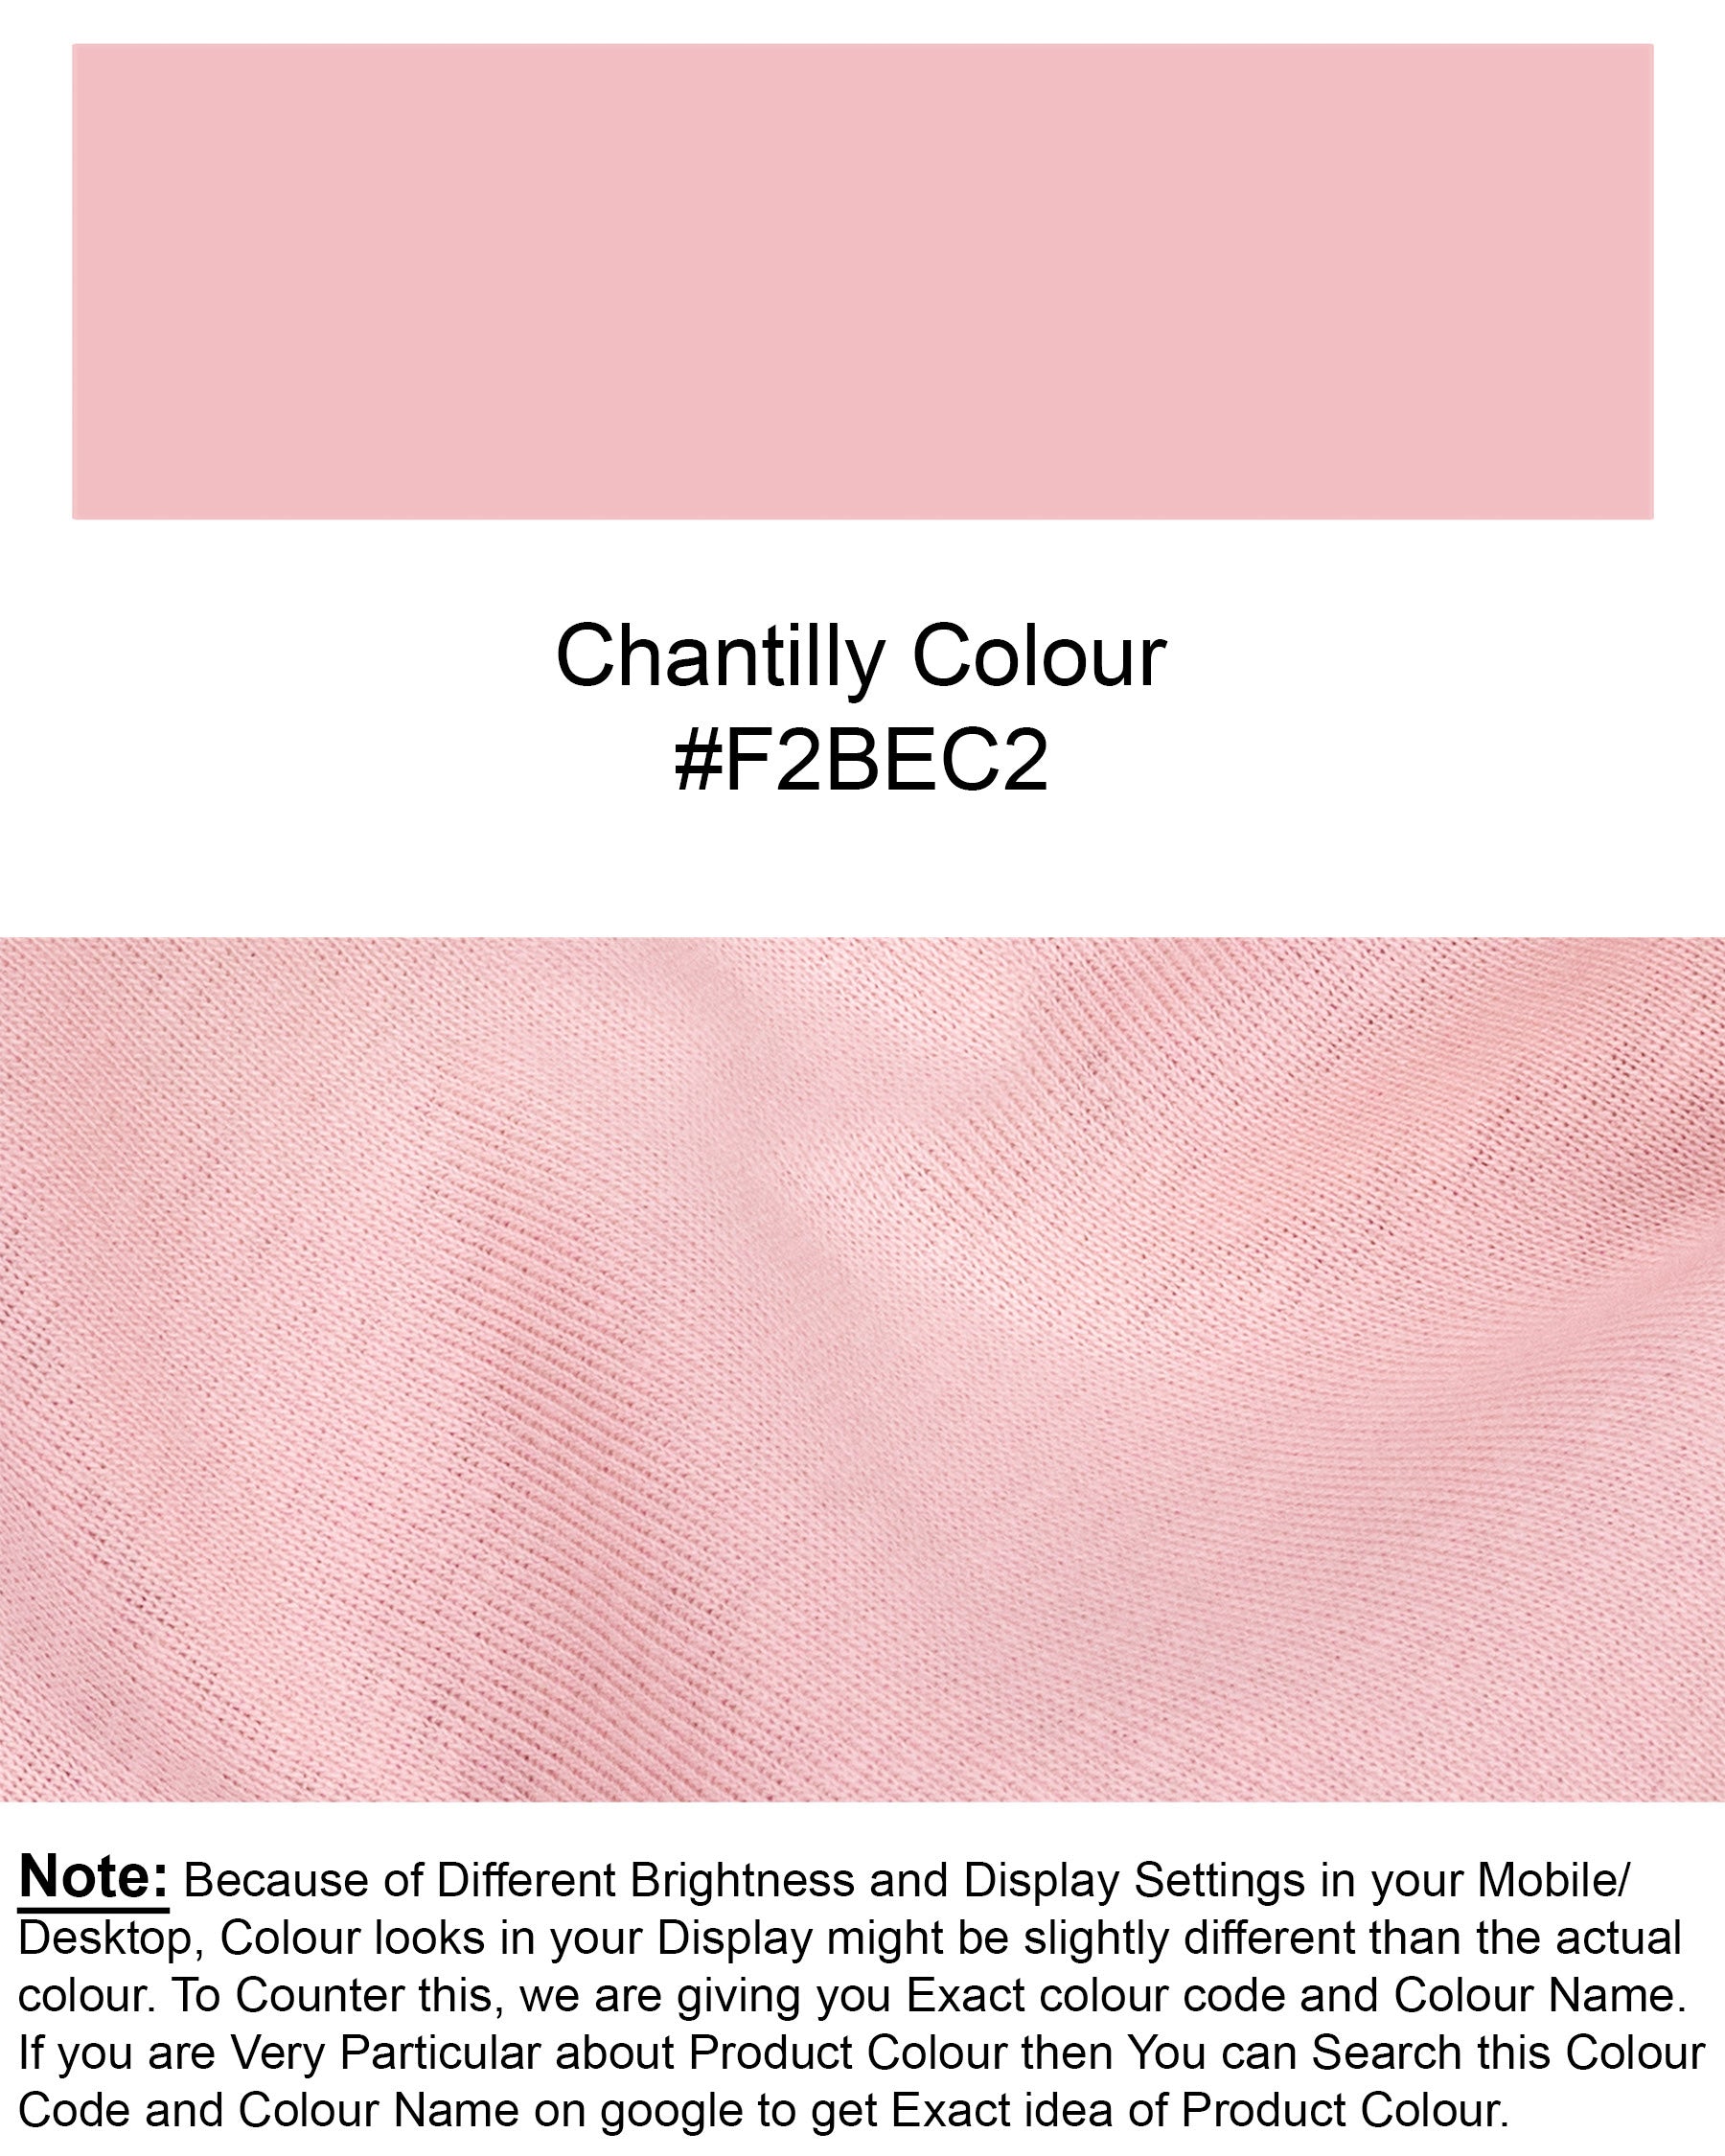 Chantilly Pink Full Sleeve Premium Cotton Jersey Sweatshirt TS454-S, TS454-M, TS454-L, TS454-XL, TS454-XXL